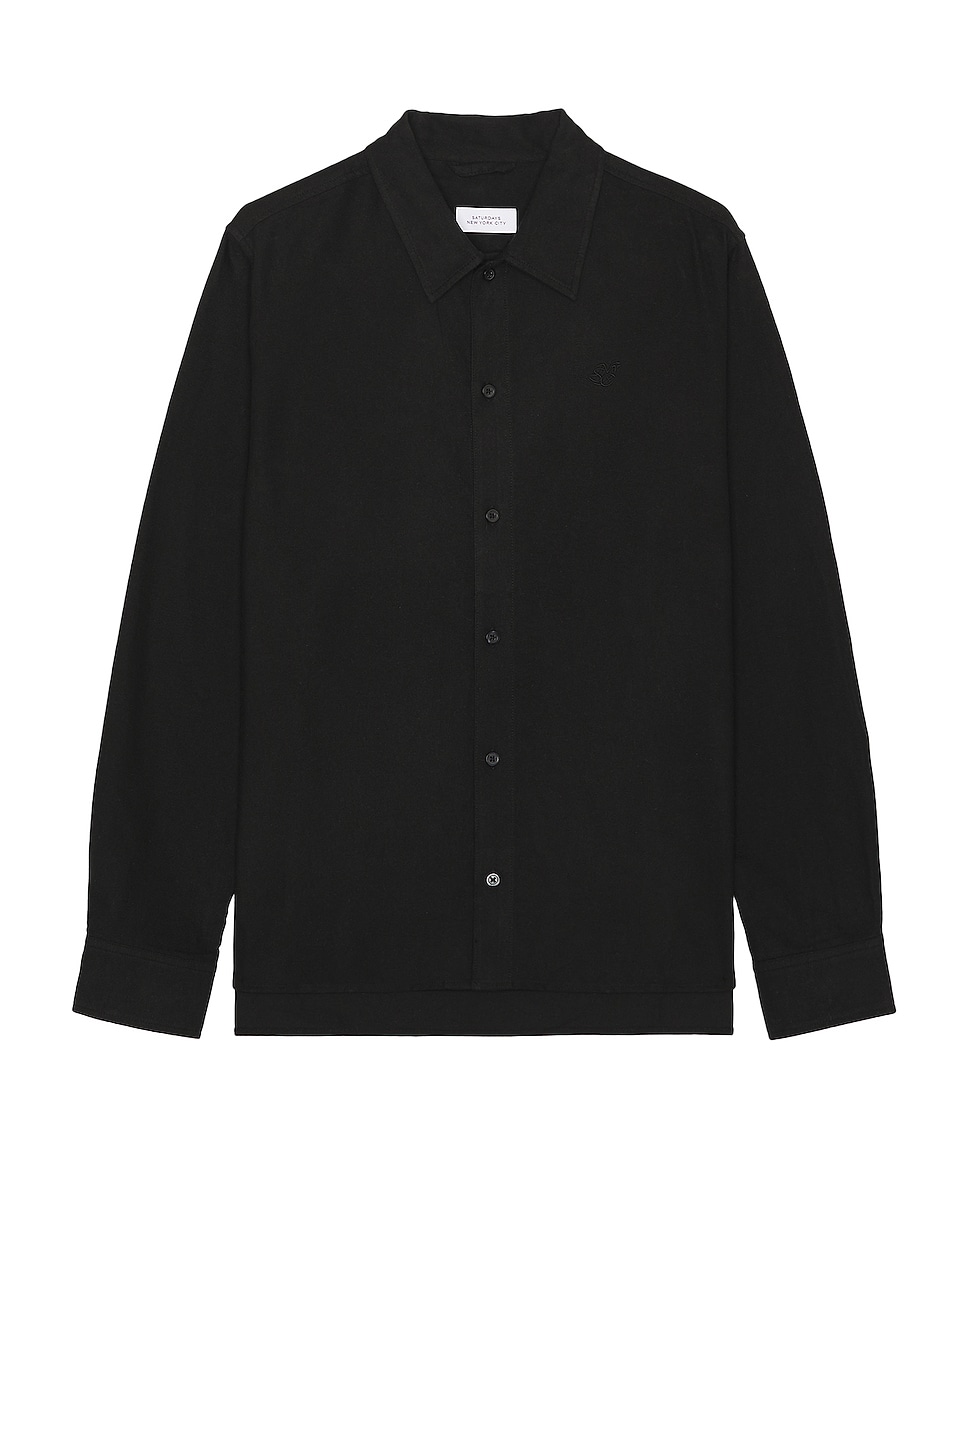 SATURDAYS NYC Broome Flannel Shirt in Black | REVOLVE